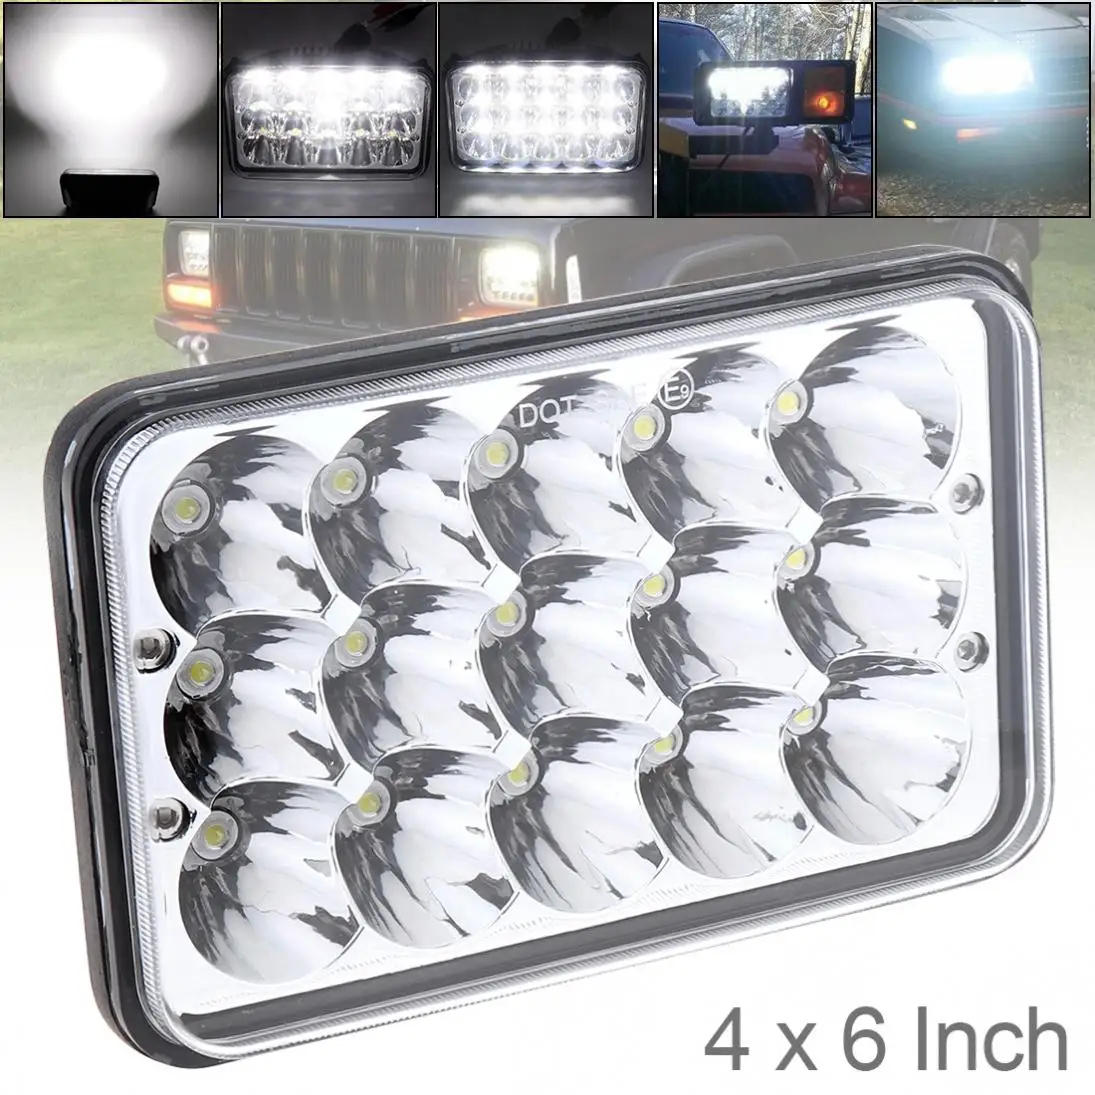 4X6 Inch, Faruri cu LED-uri Dreptunghiulare pentru Jeep Wrangler YJ, Cherokee XJ Camioane 4X4 Offroad Far